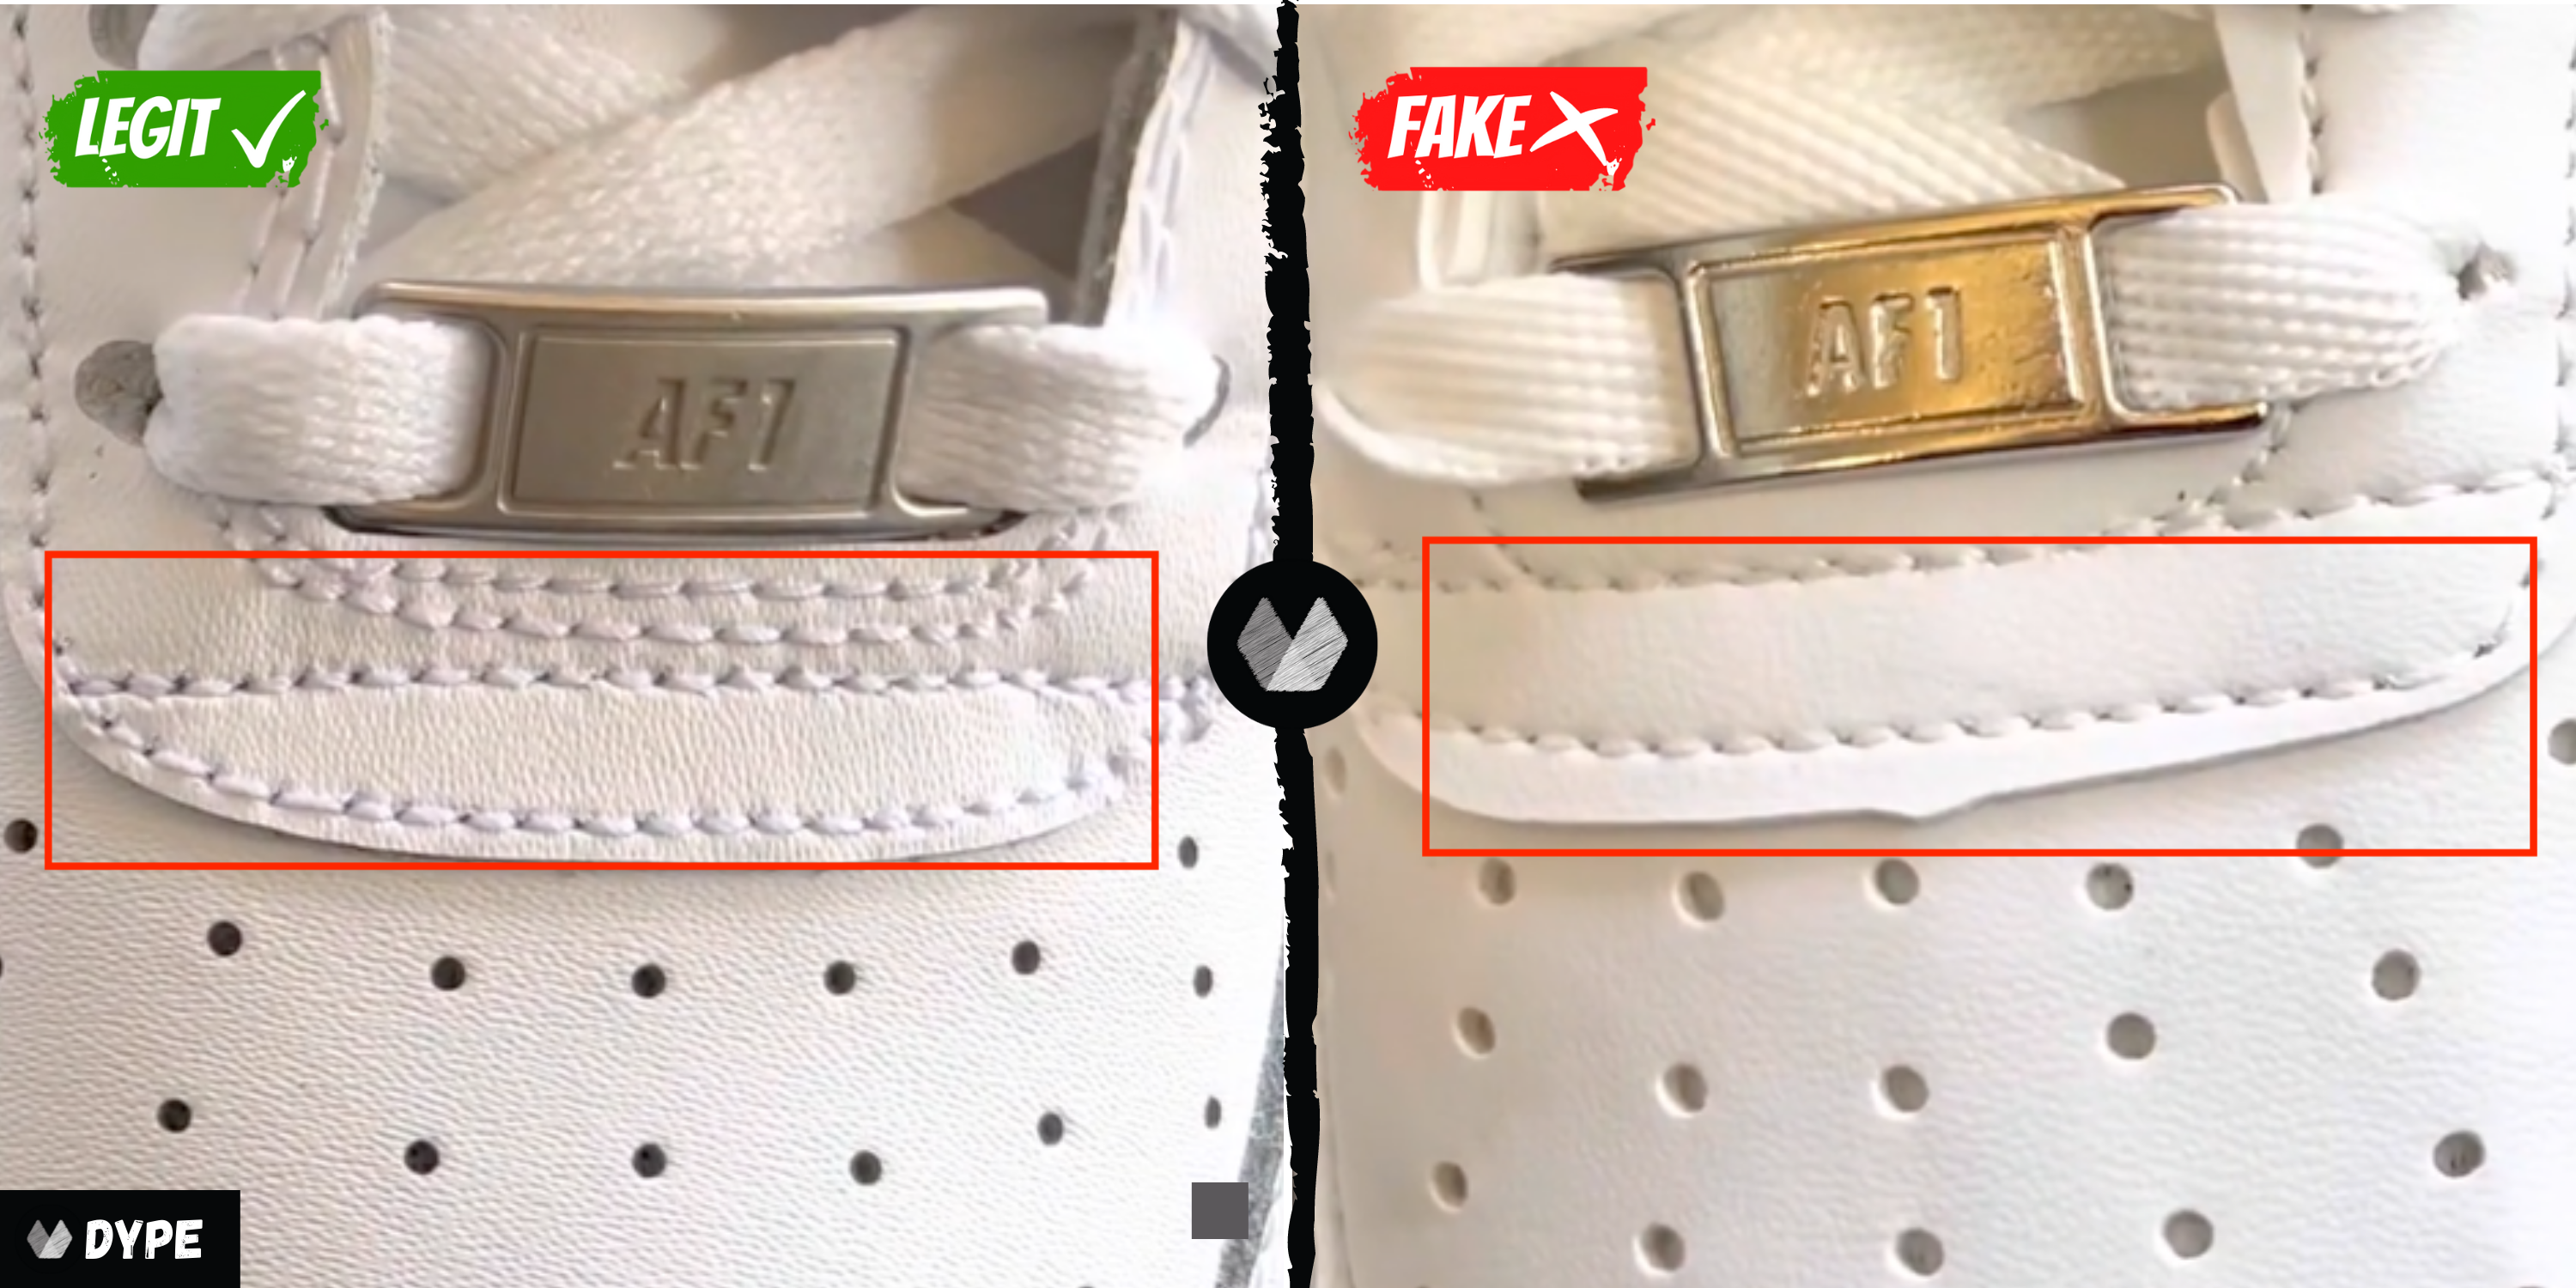 Nike Air Force 1 real vs fake review. How to spot fake Nike Air